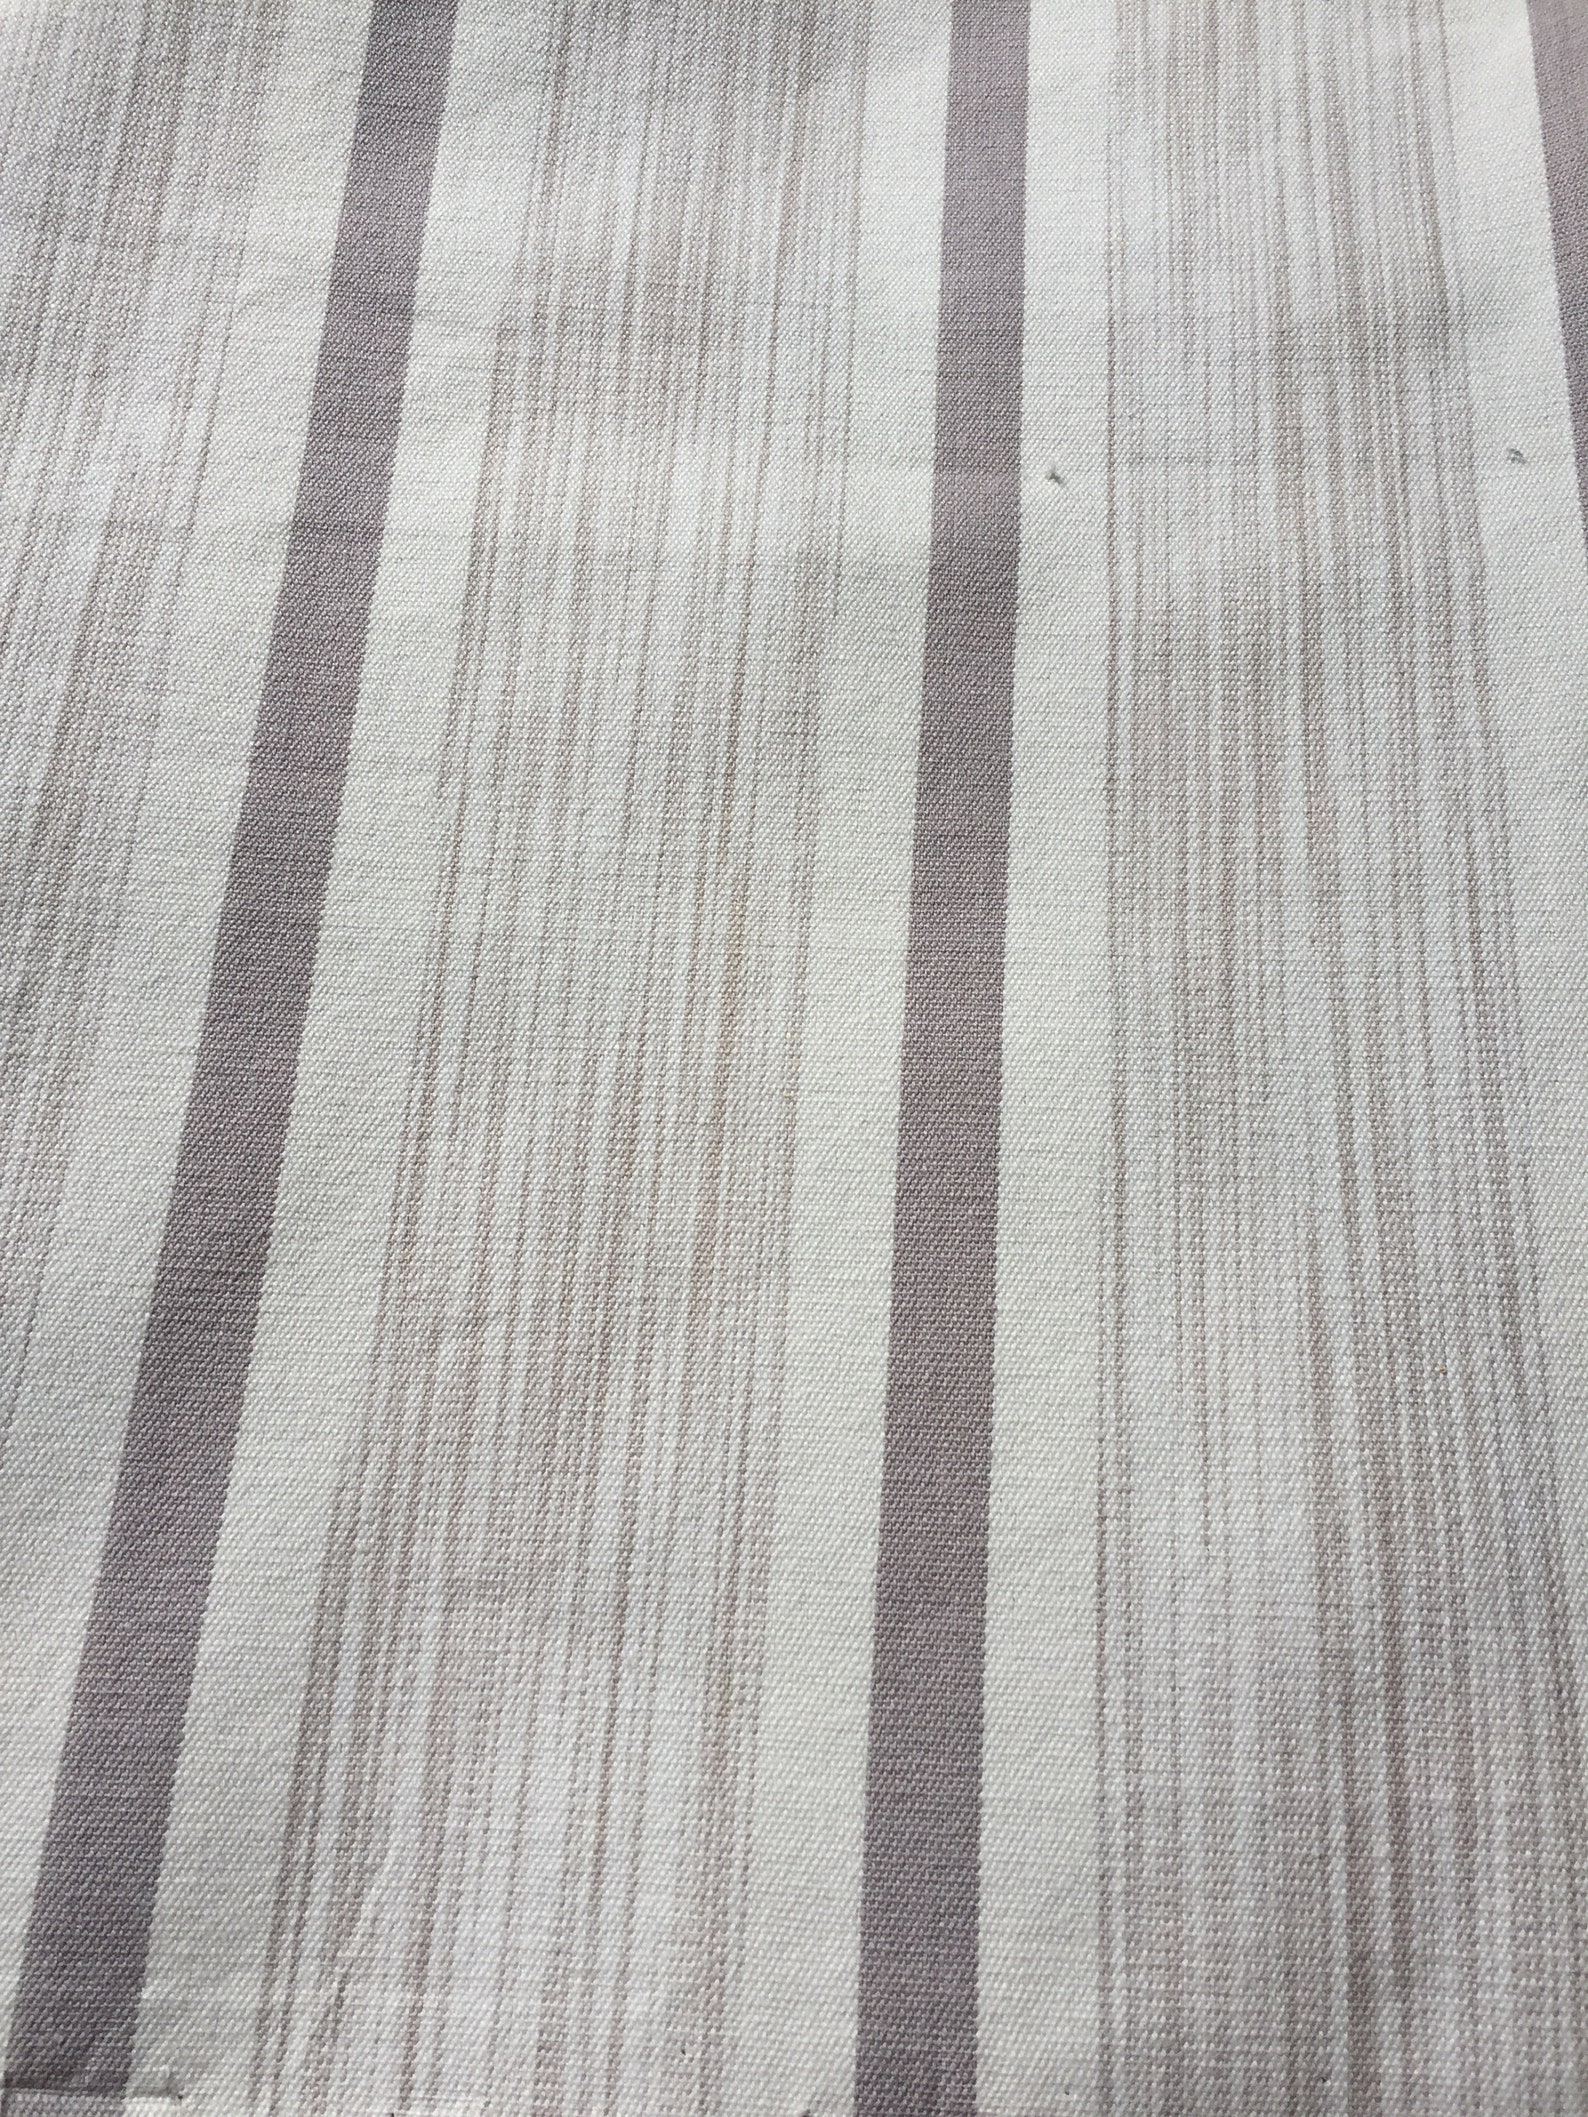 Fabric Sample Squares 16 X 18.5 Cream Beige Cotton Linen | Etsy